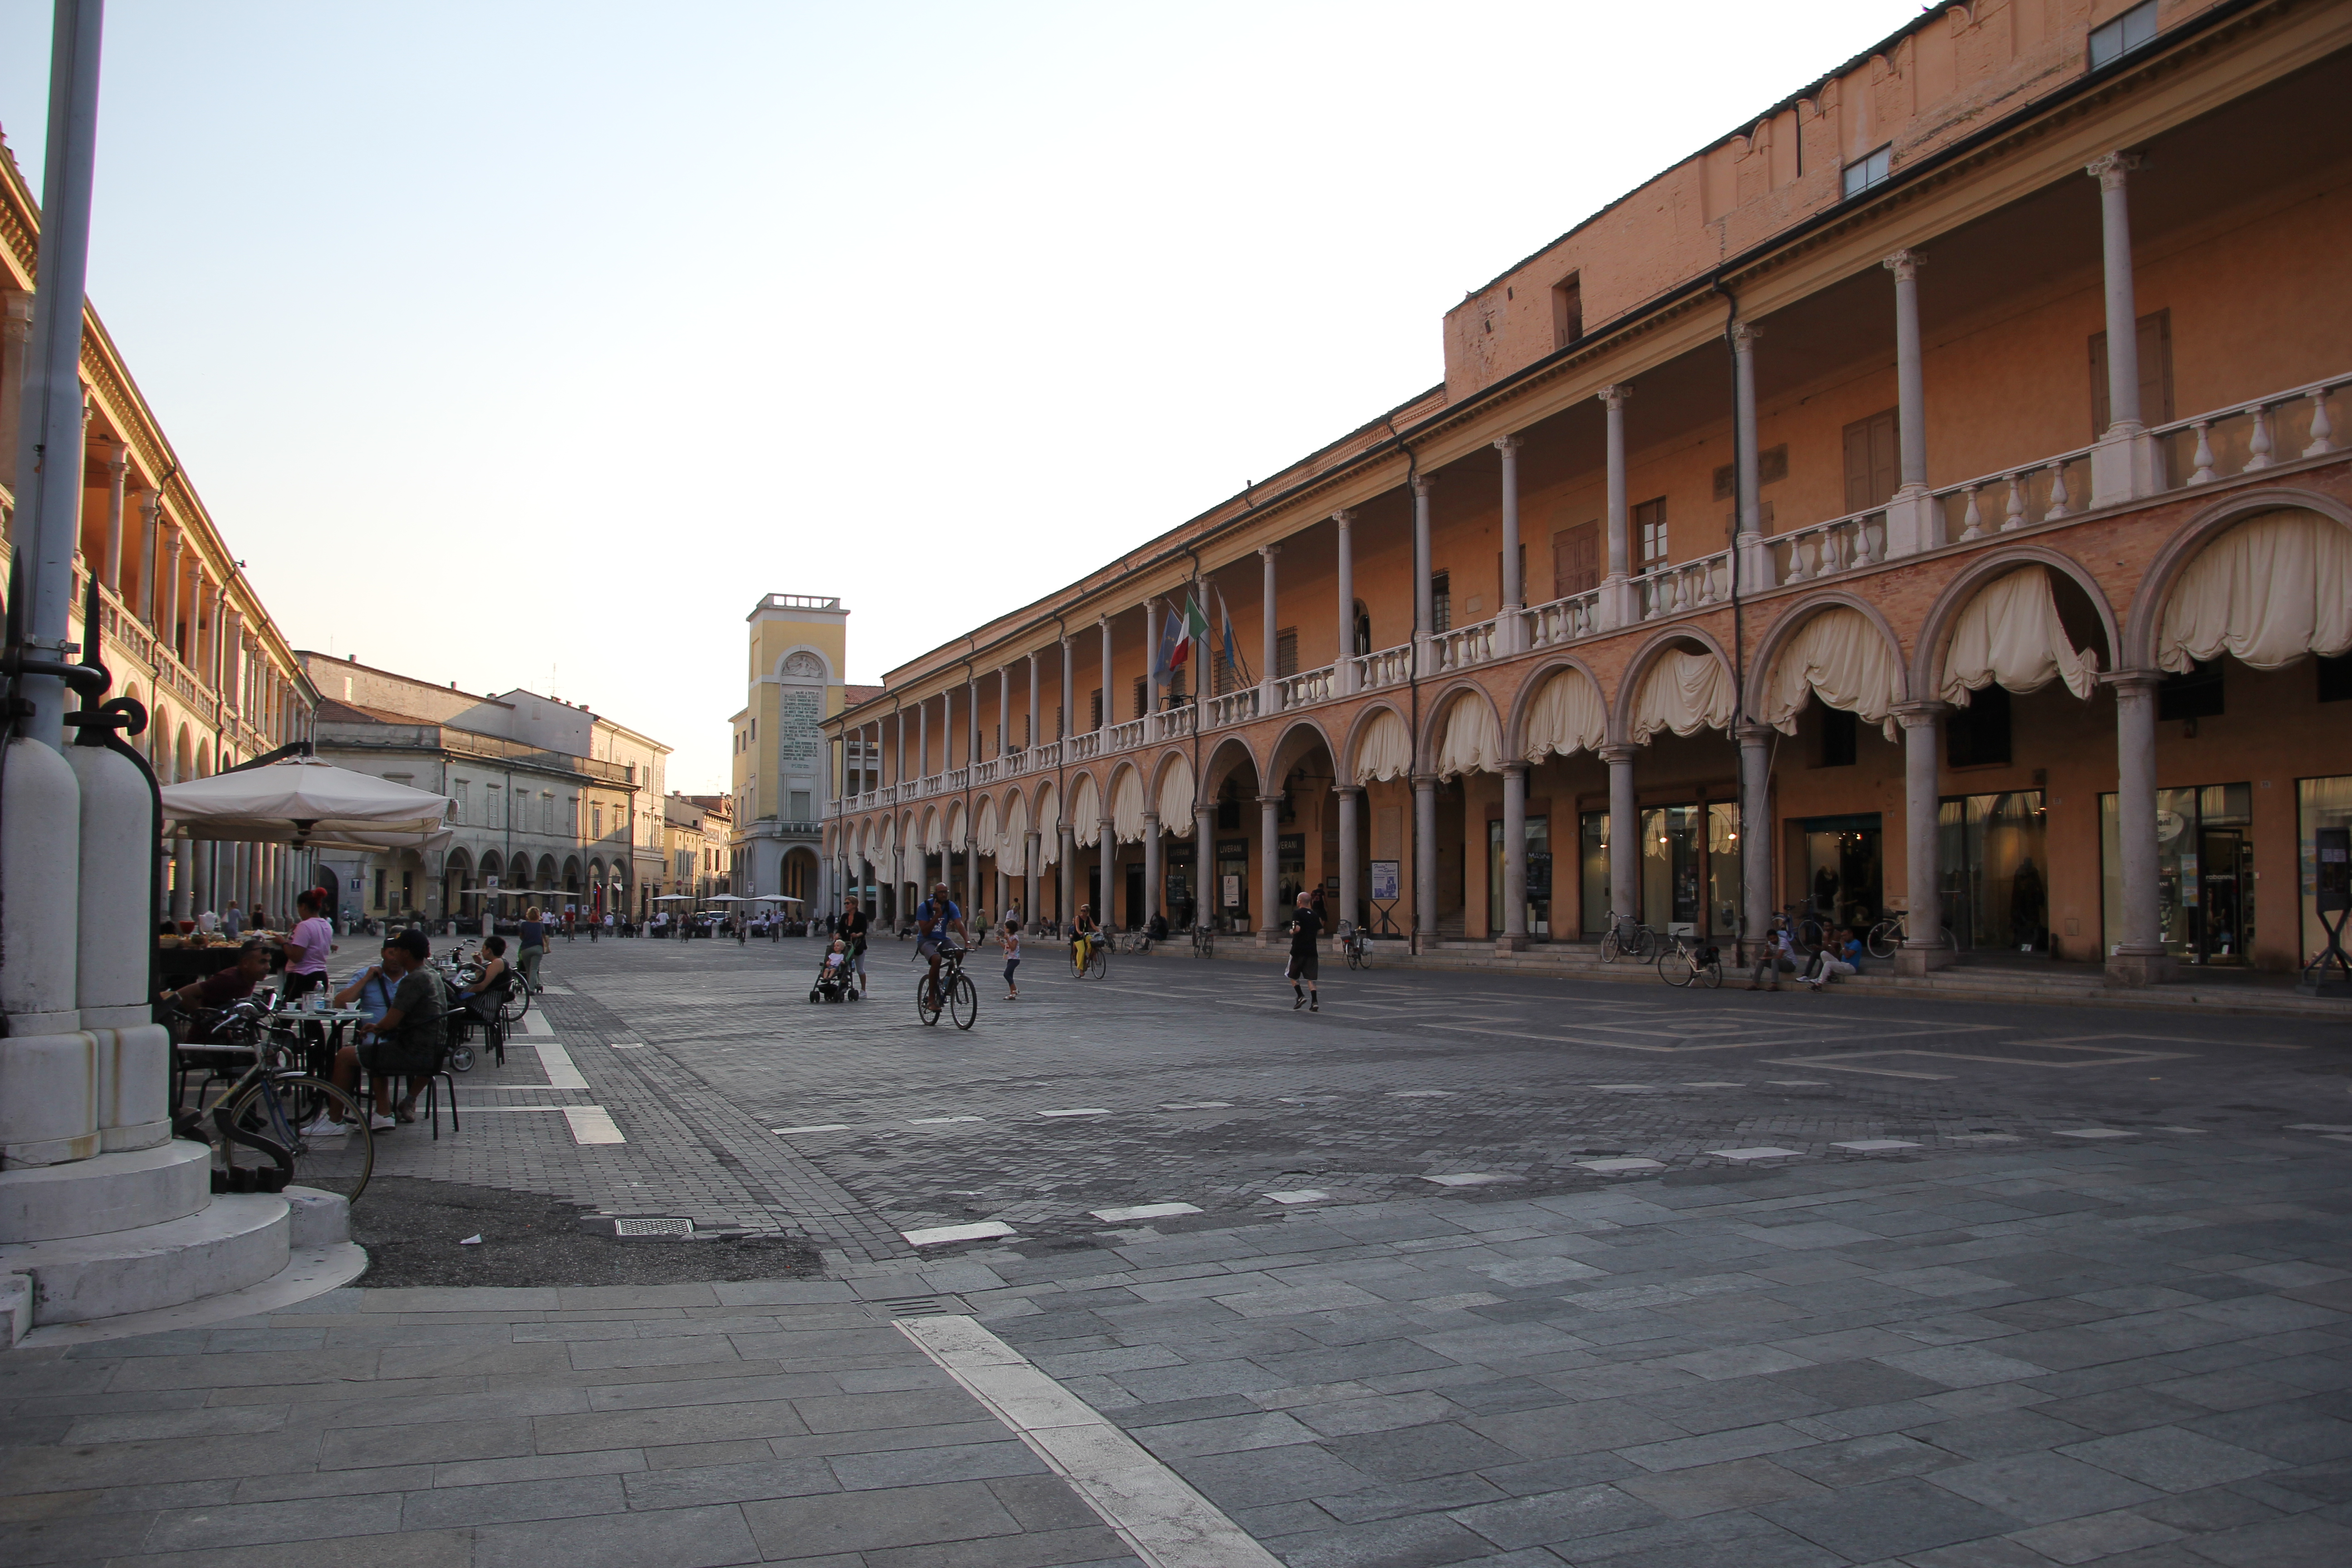 foto: https://upload.wikimedia.org/wikipedia/commons/9/9b/Faenza%2C_piazza_del_Popolo_%2803%29.jpg